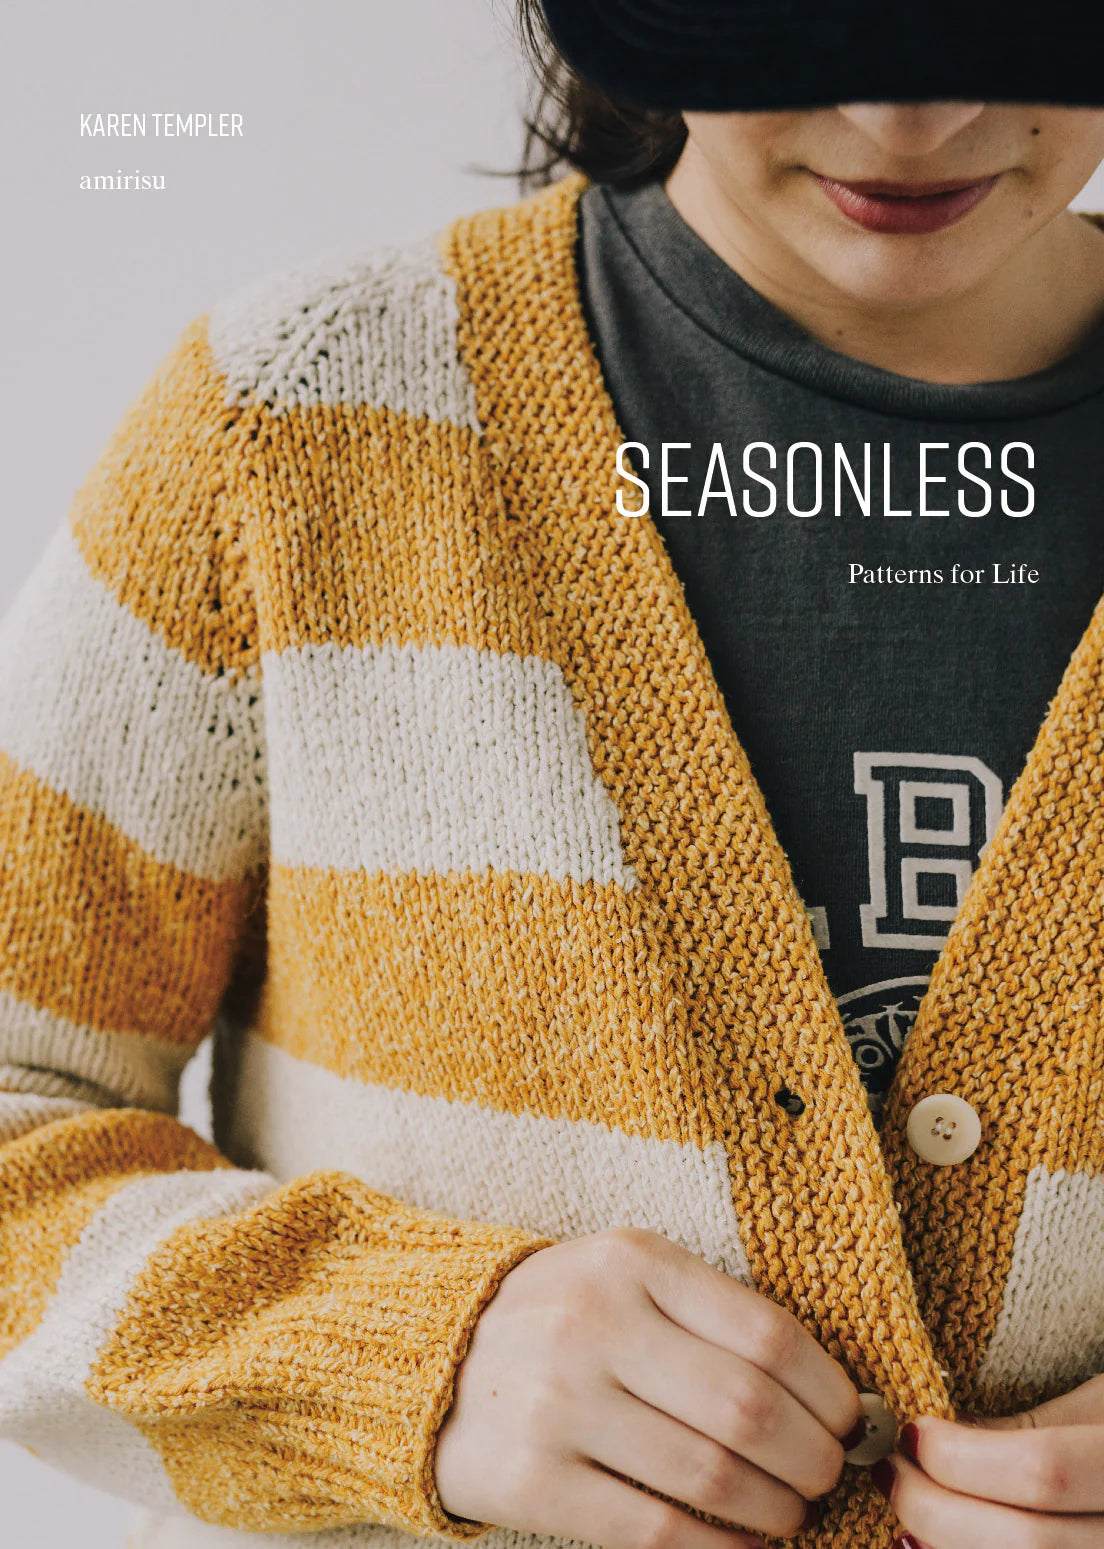 Seasonless: Patterns for Life